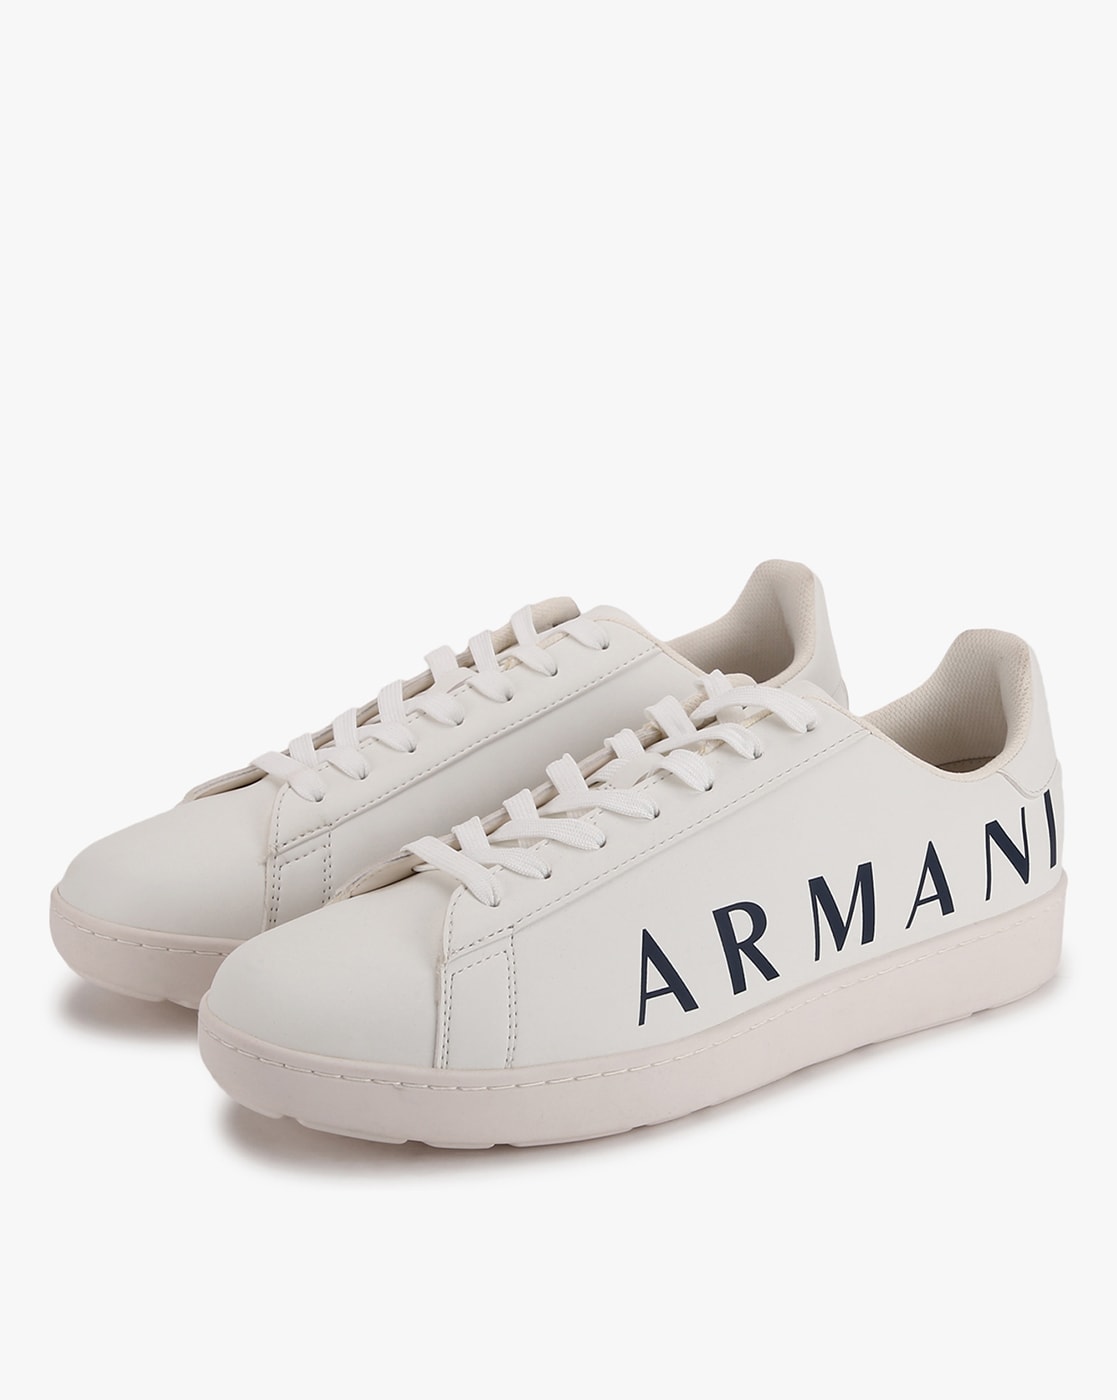 armani exchange slippers india